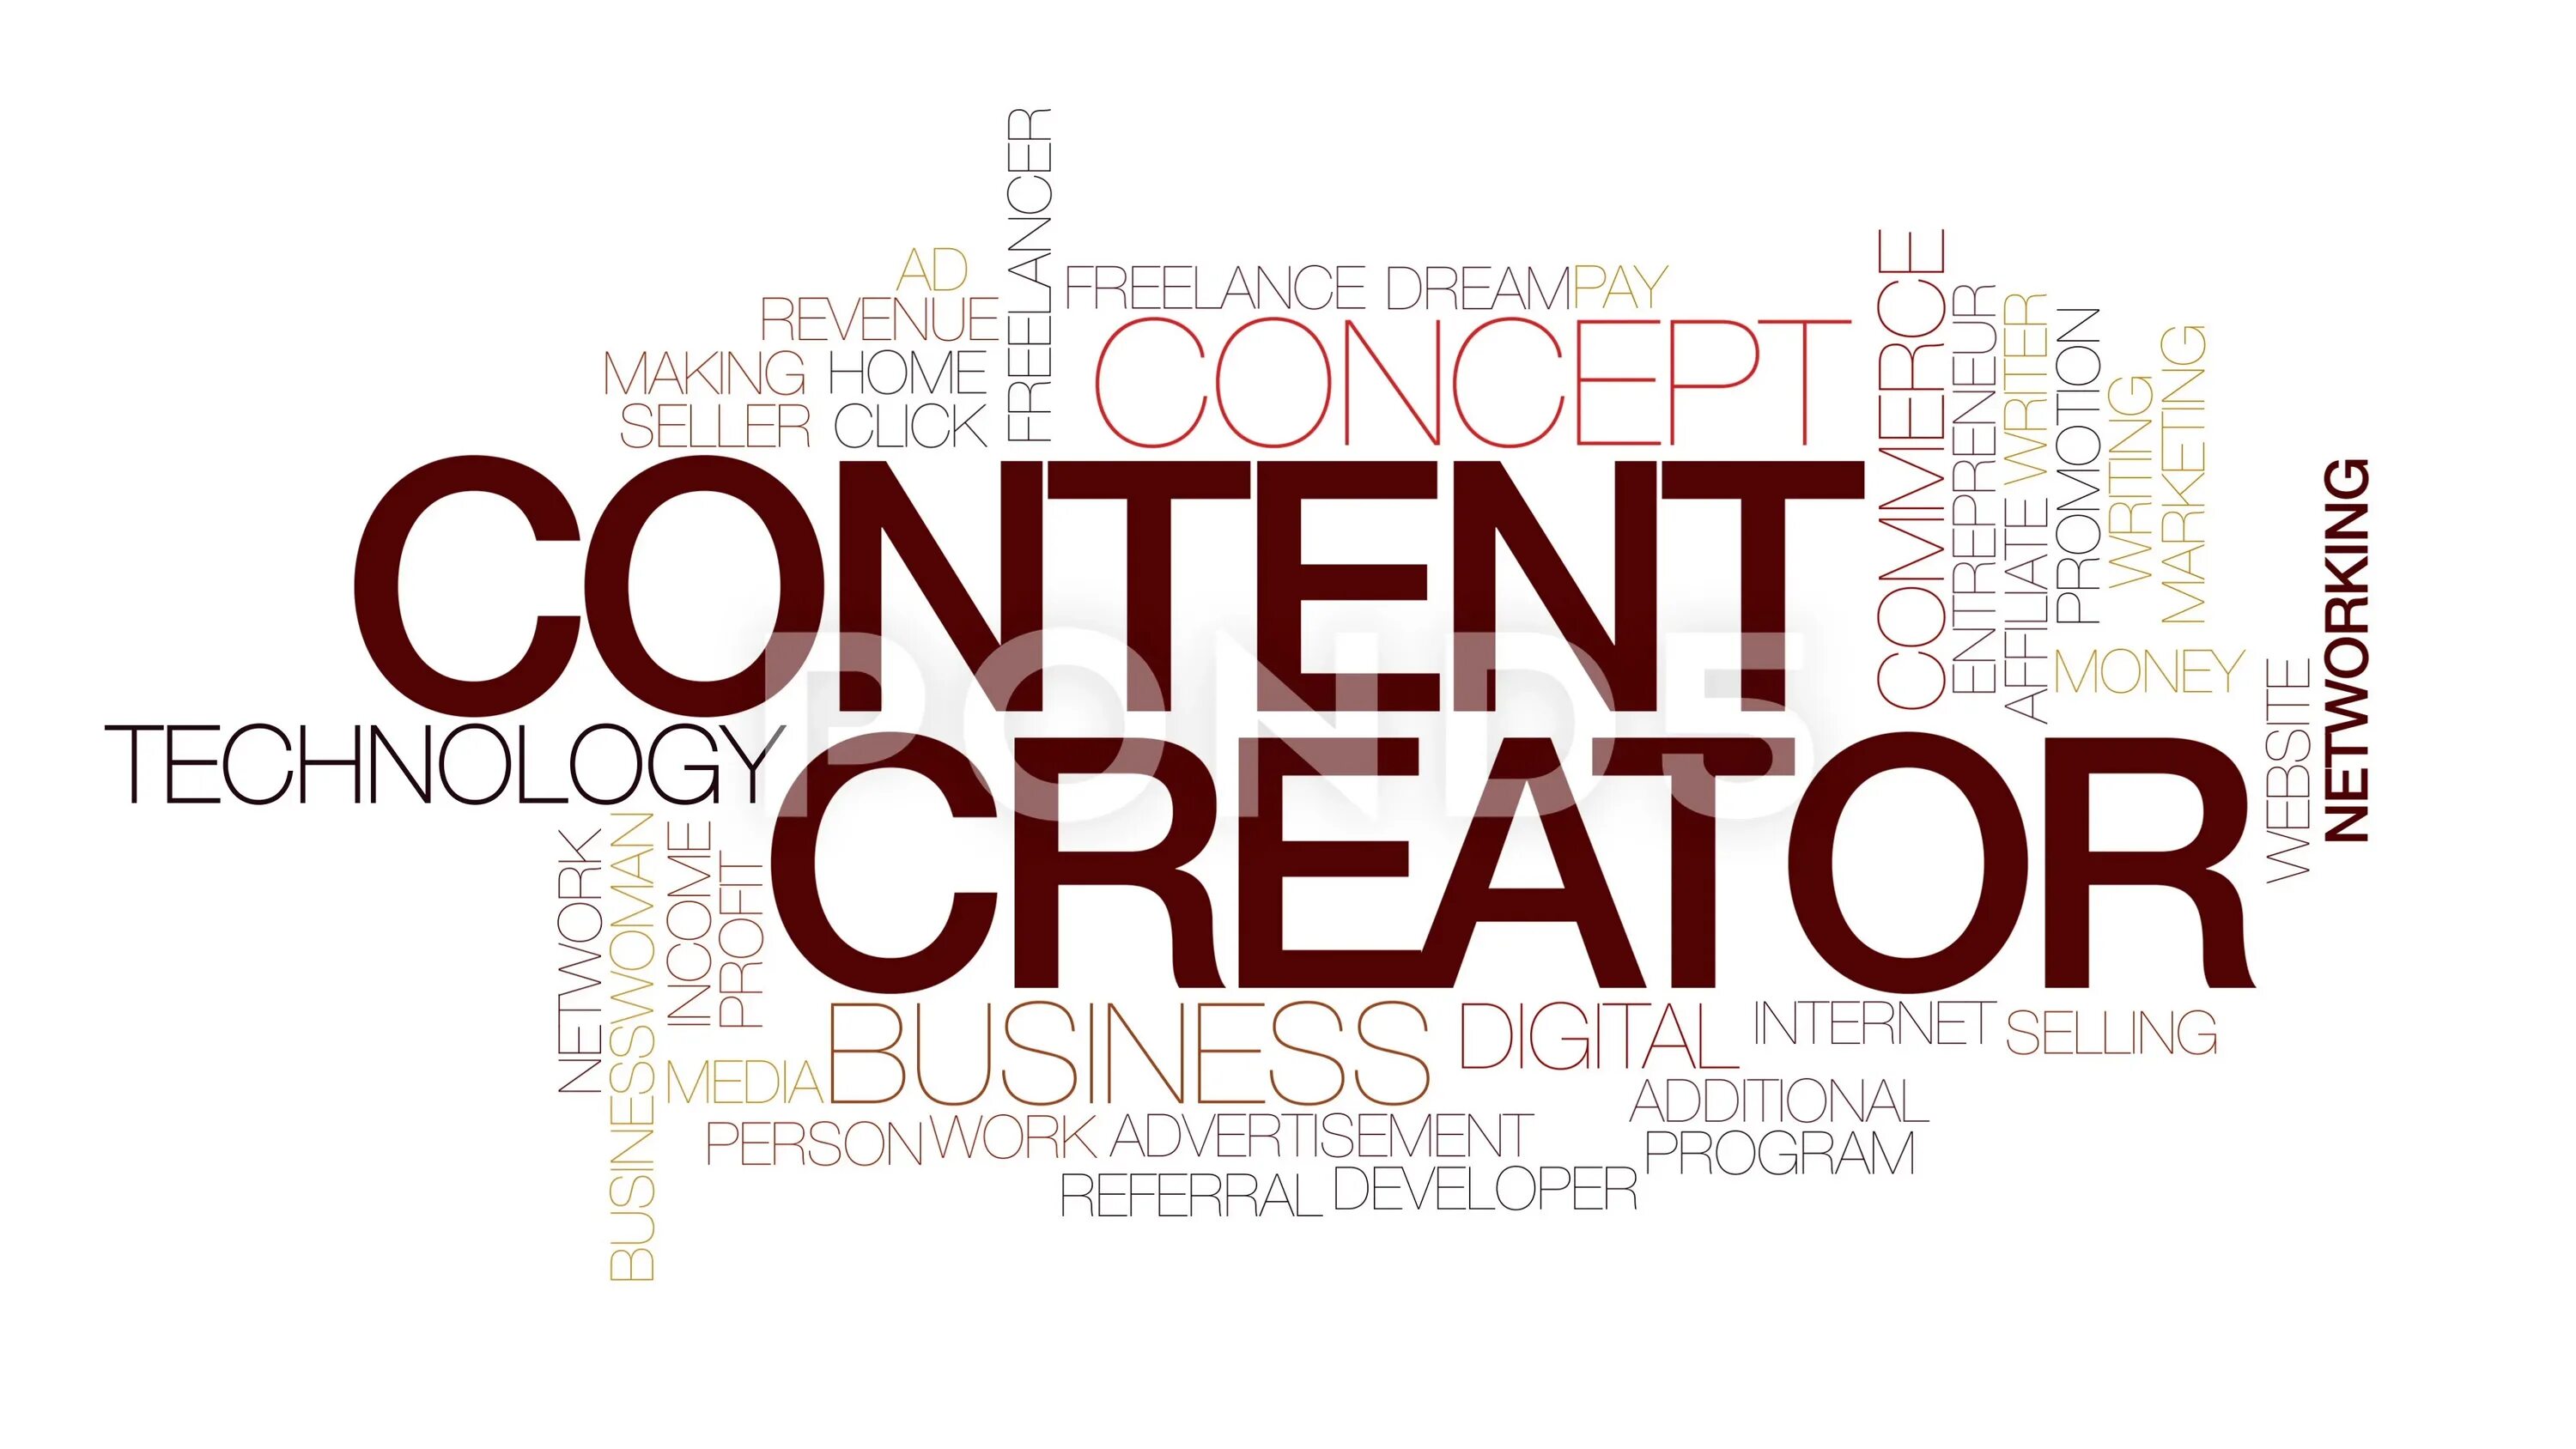 Content creation. Контент креатор. Картинка content creator. Надпись content creator.